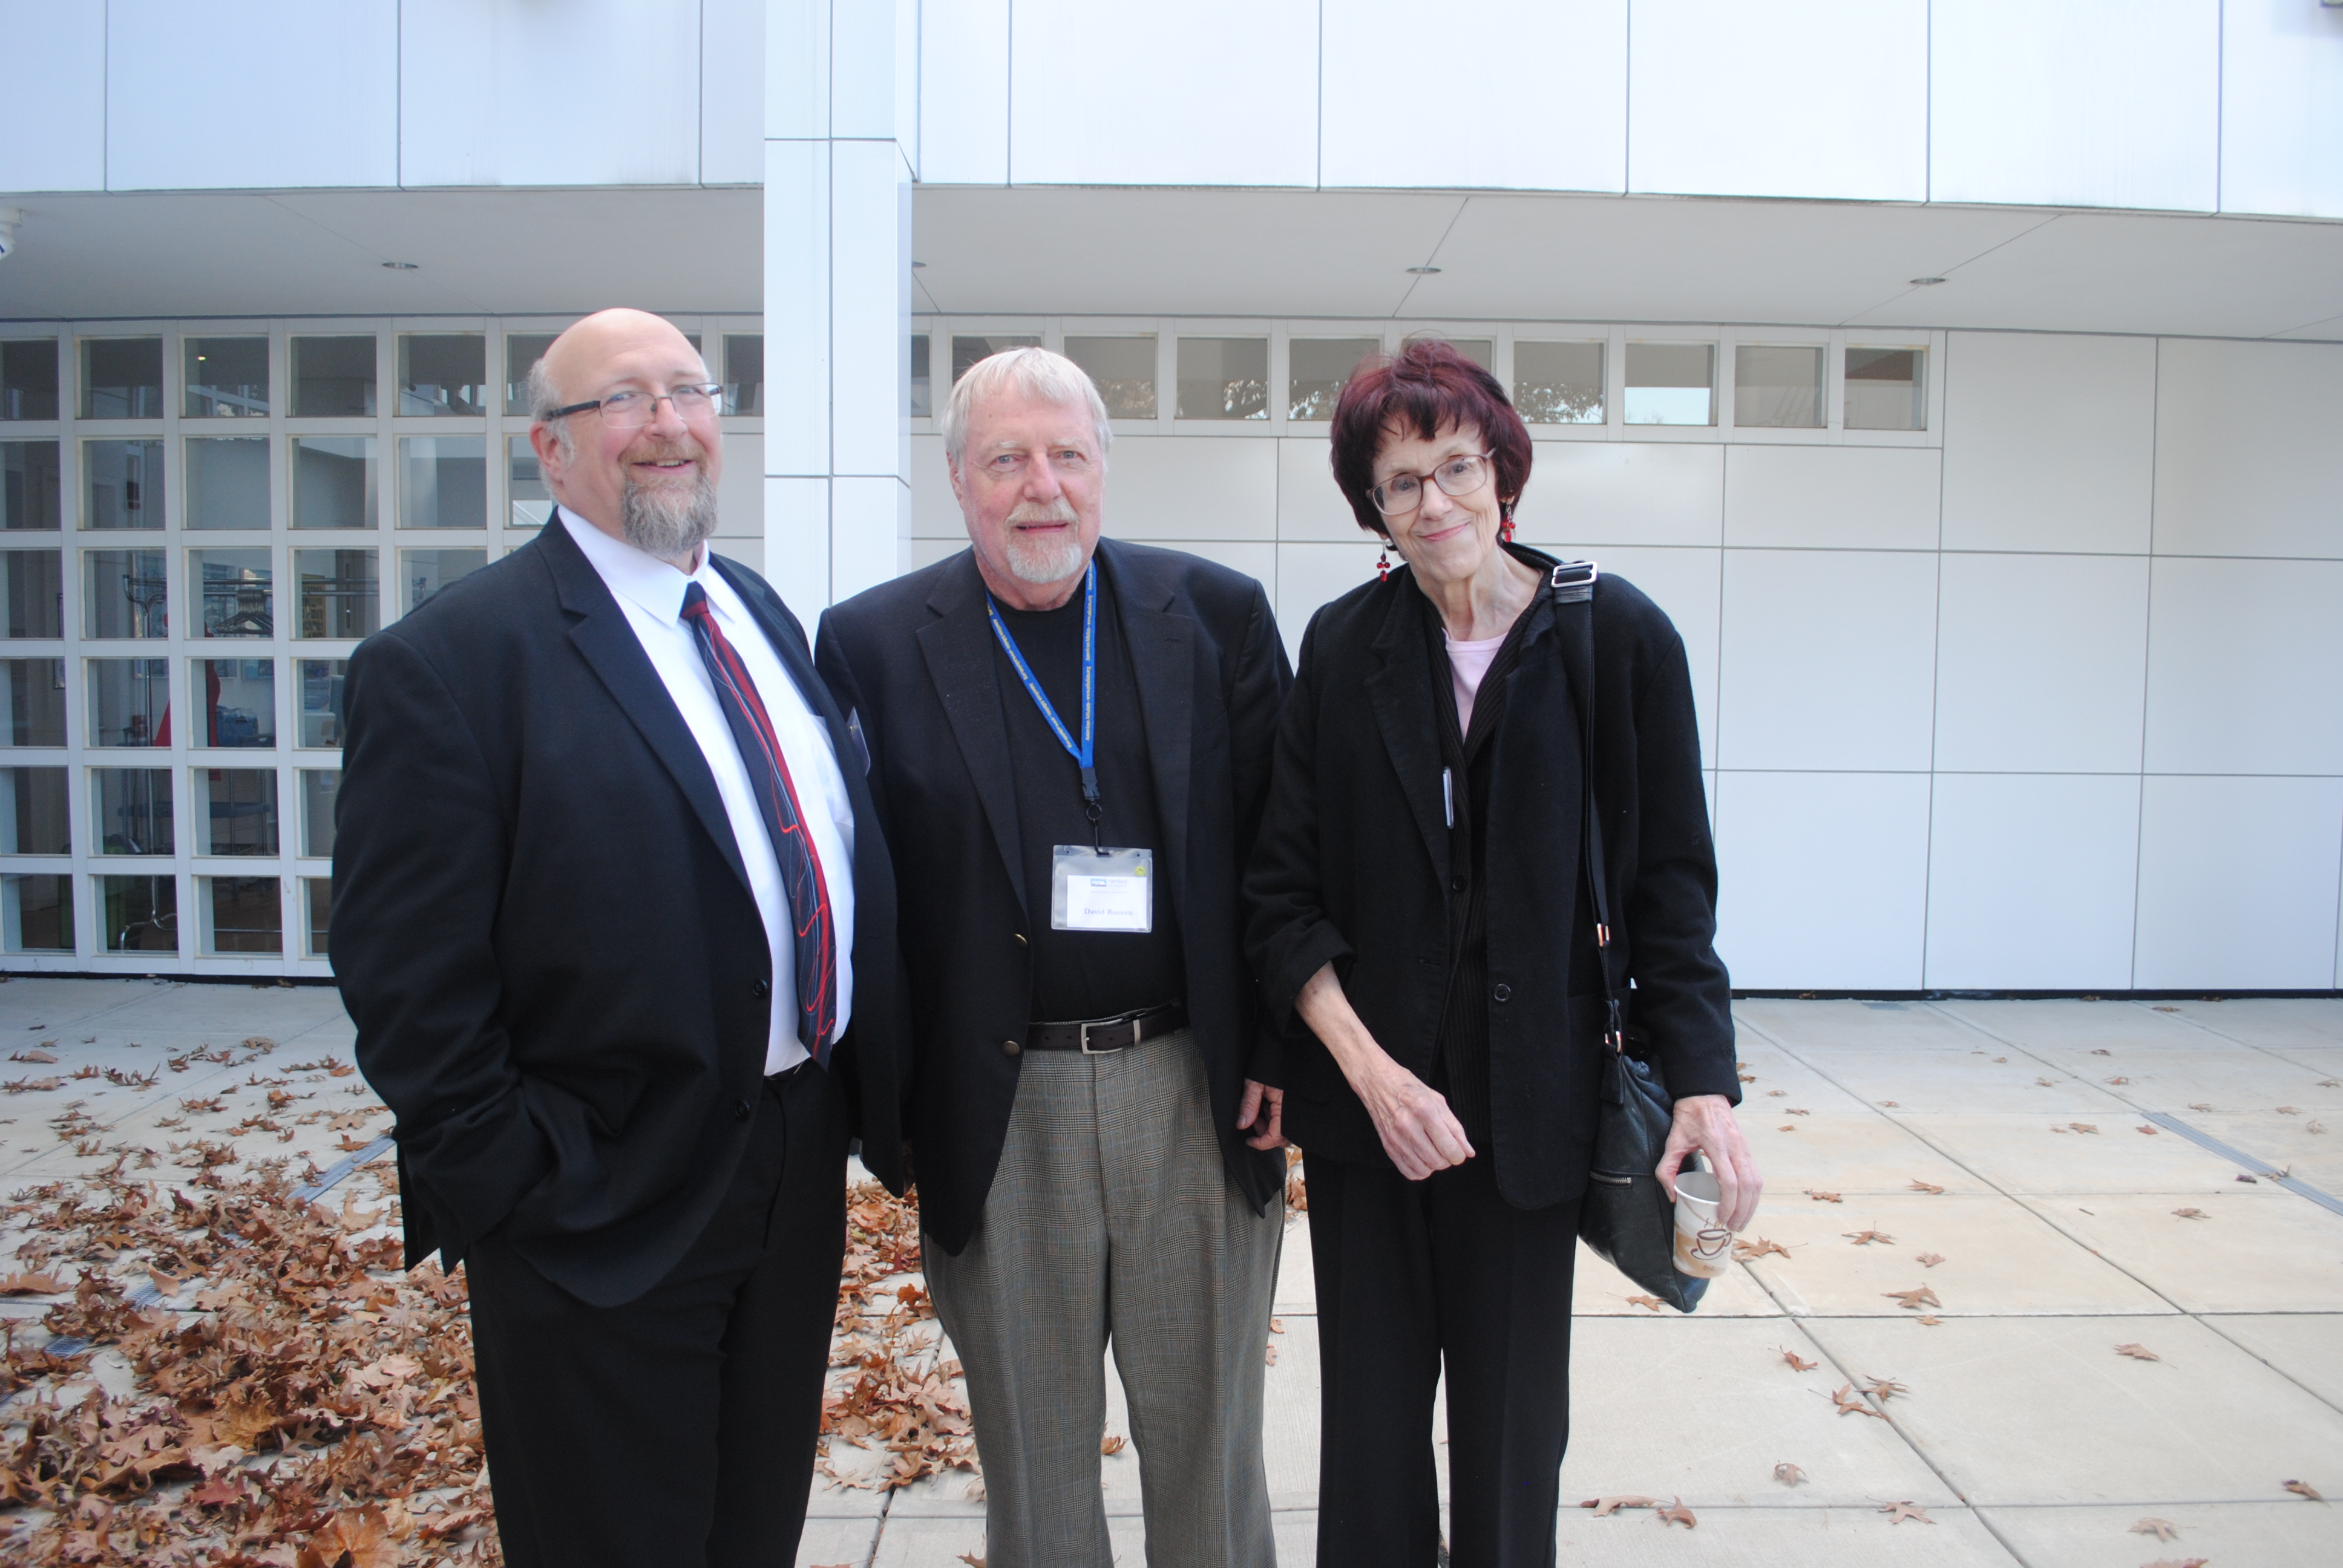 Scott Thumma, David Roozen, and Adair Lummis of the Hartford Institute for Religion Research